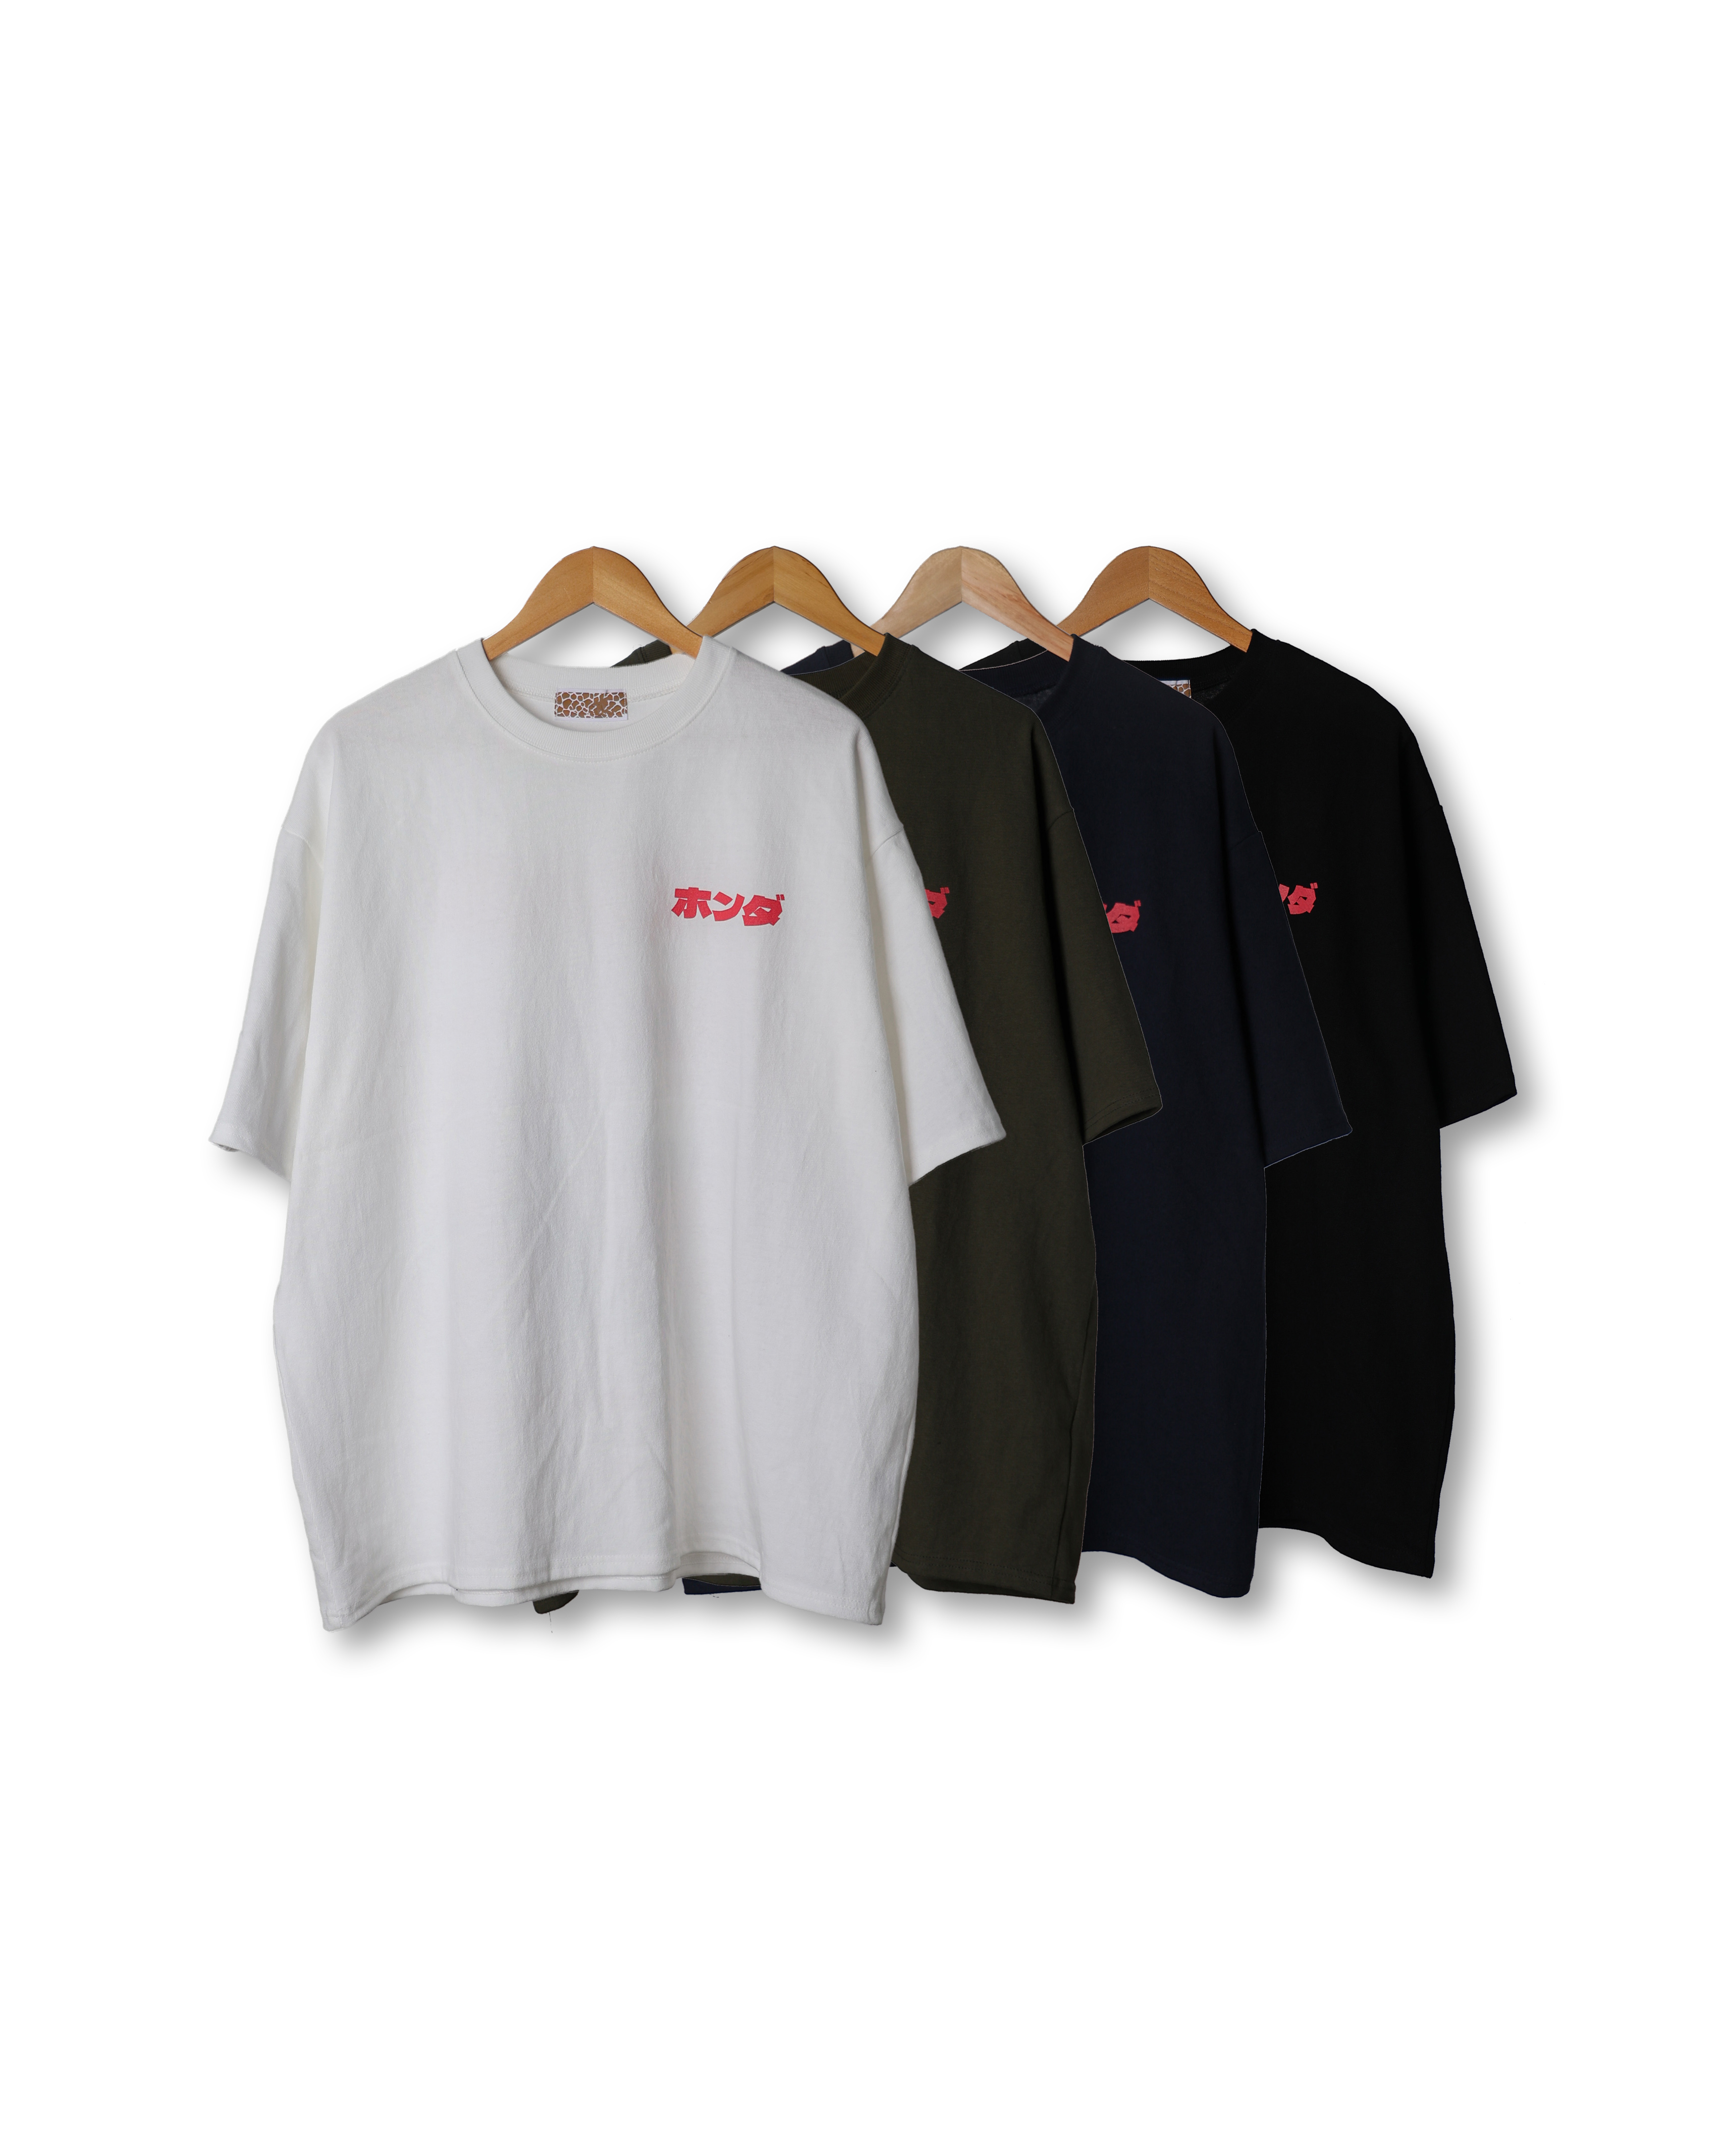 KIRI Hiragana Over Printed T Shirts (Black/Navy/Olive/Ivory) - 16차 리오더 (올리브 7/1 배송예정)